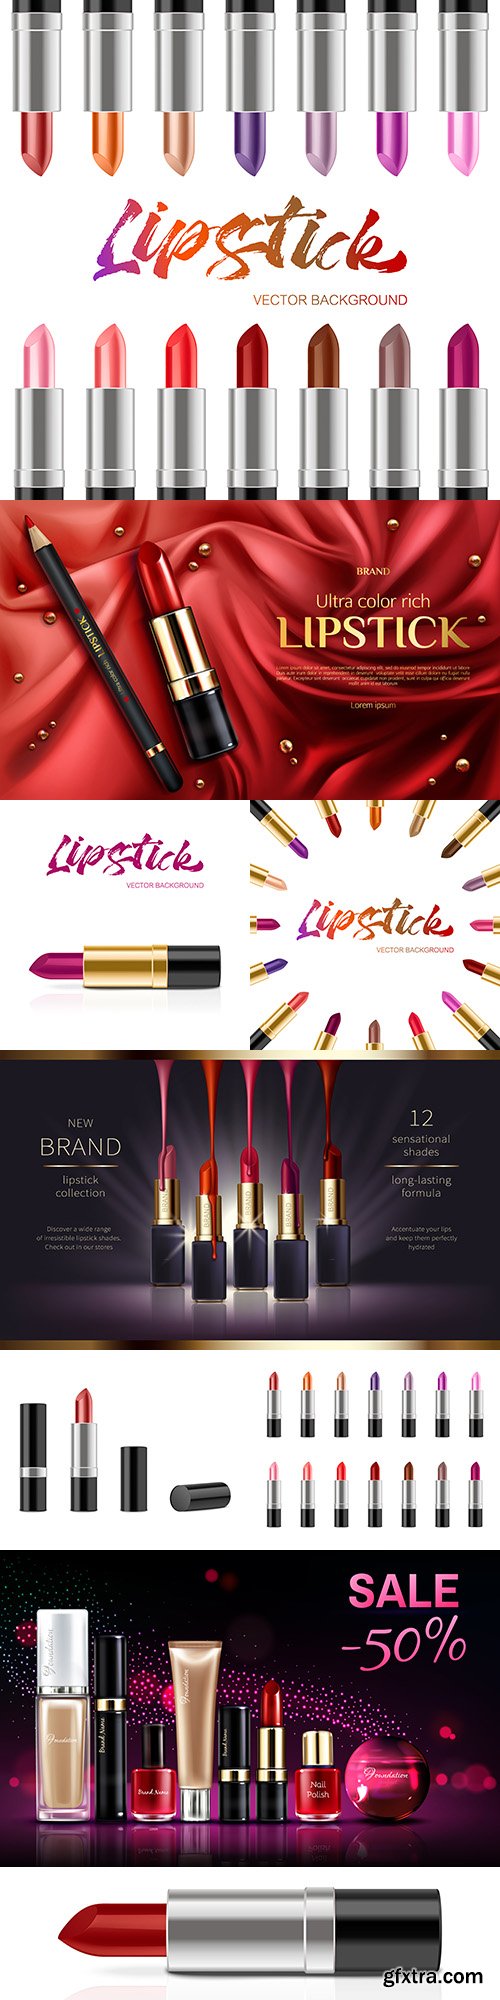 Lipstick cosmetics product banner design 3d illustration